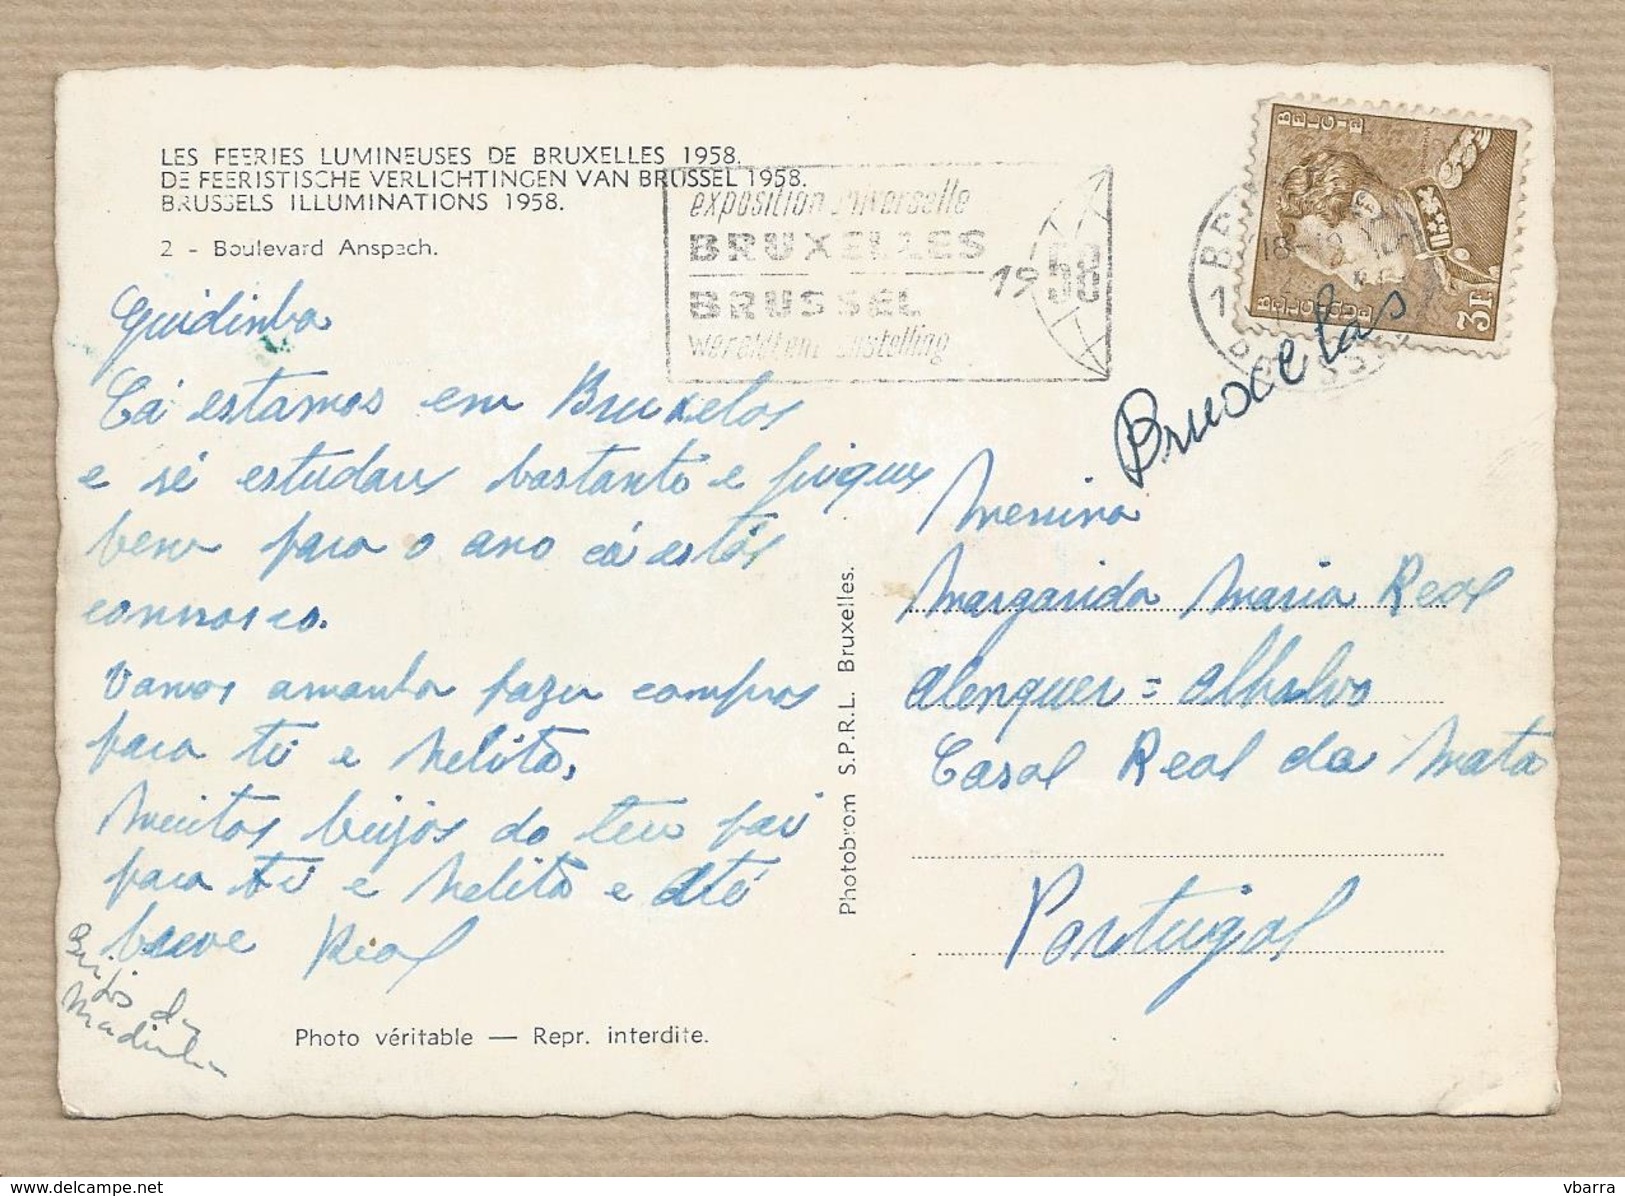 BELGIQUE Carte Postale Les Feeries Lumineuses De Bruxxeles 1958 Boulelevard Anspach. Timbre-poste Roi Leopold III - 3. F - Bruselas La Noche